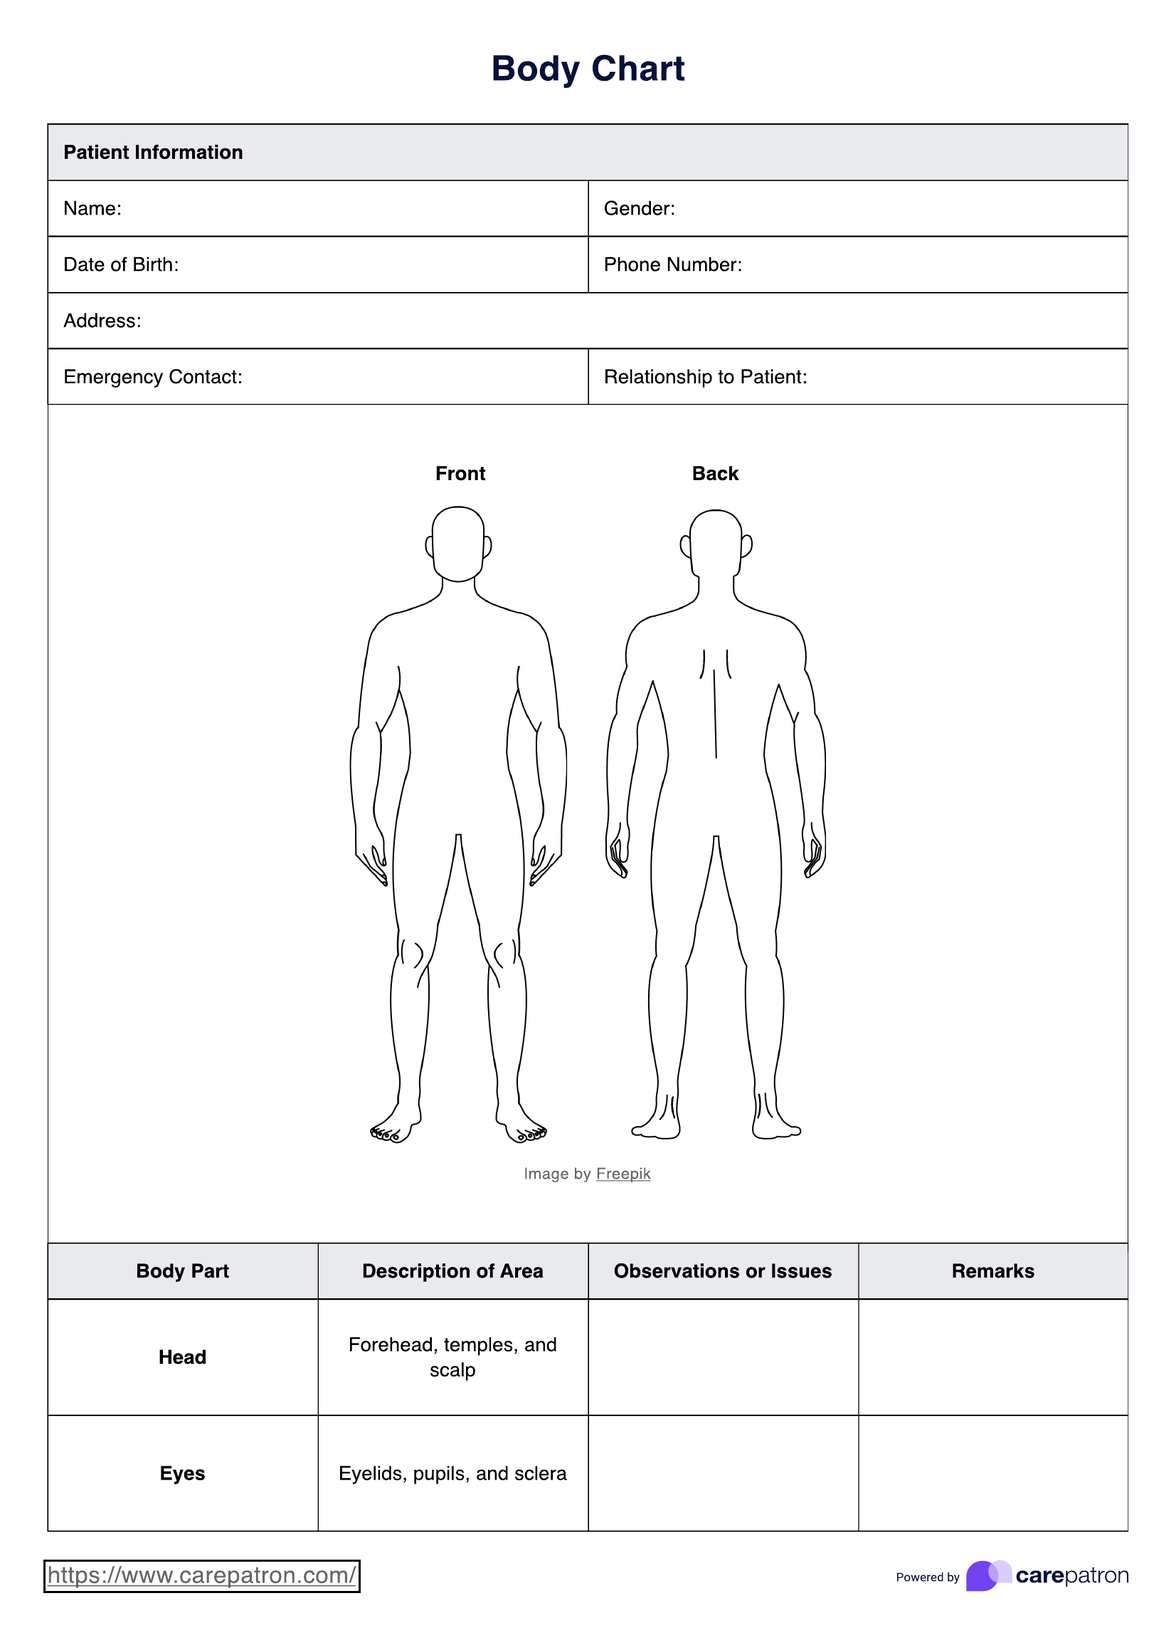 Body Chart PDF Example